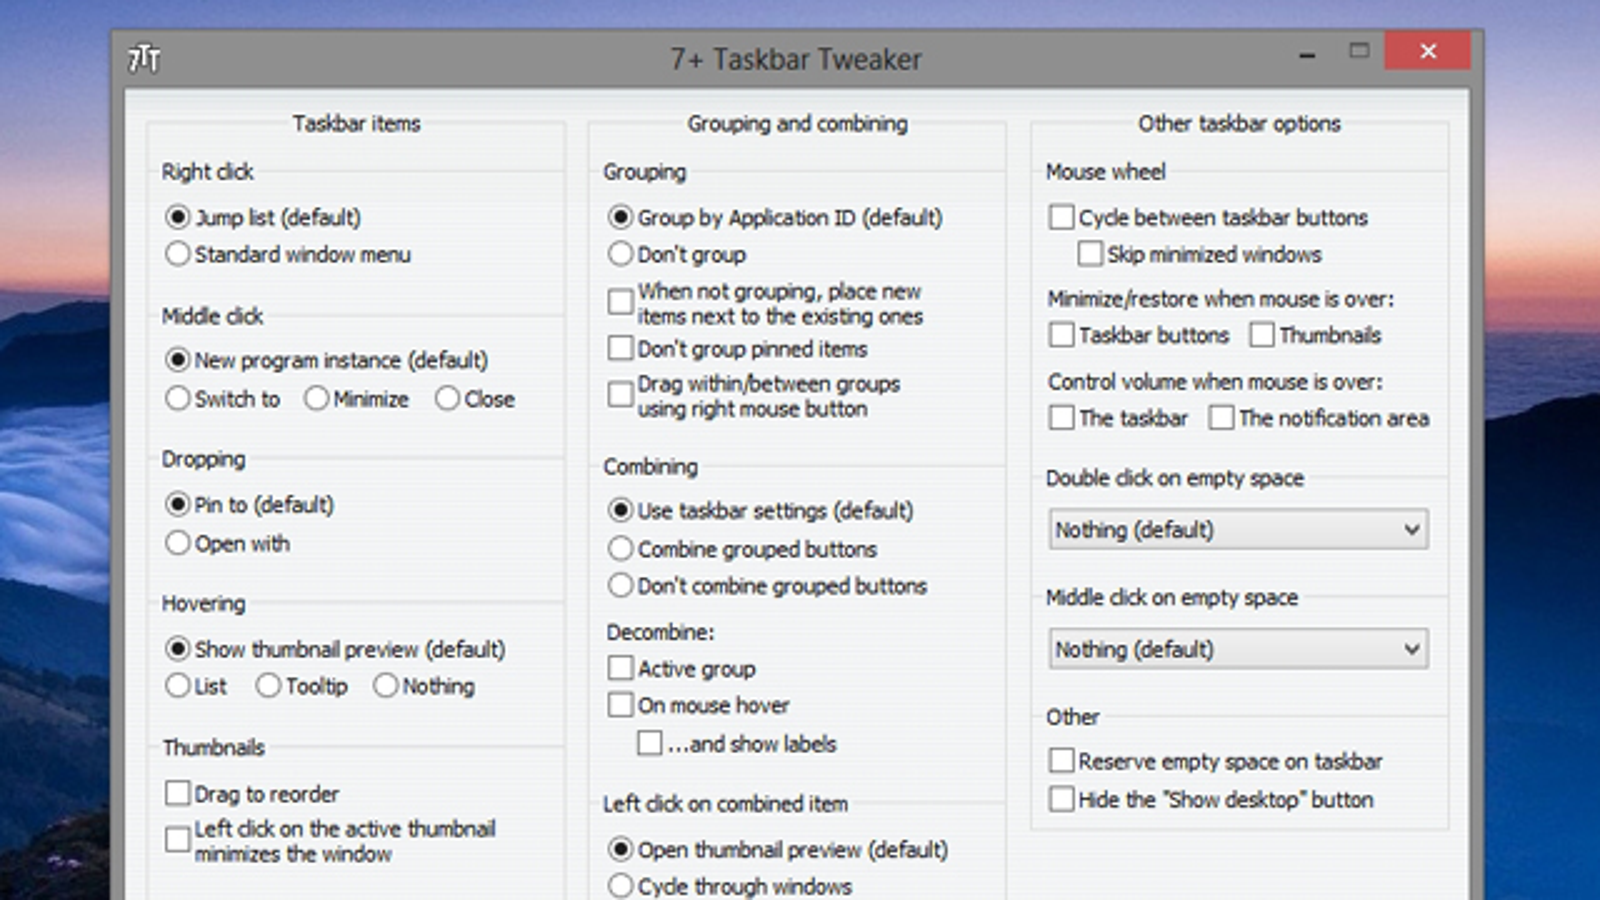 7+ Taskbar Tweaker 5.14.3.0 for ipod download